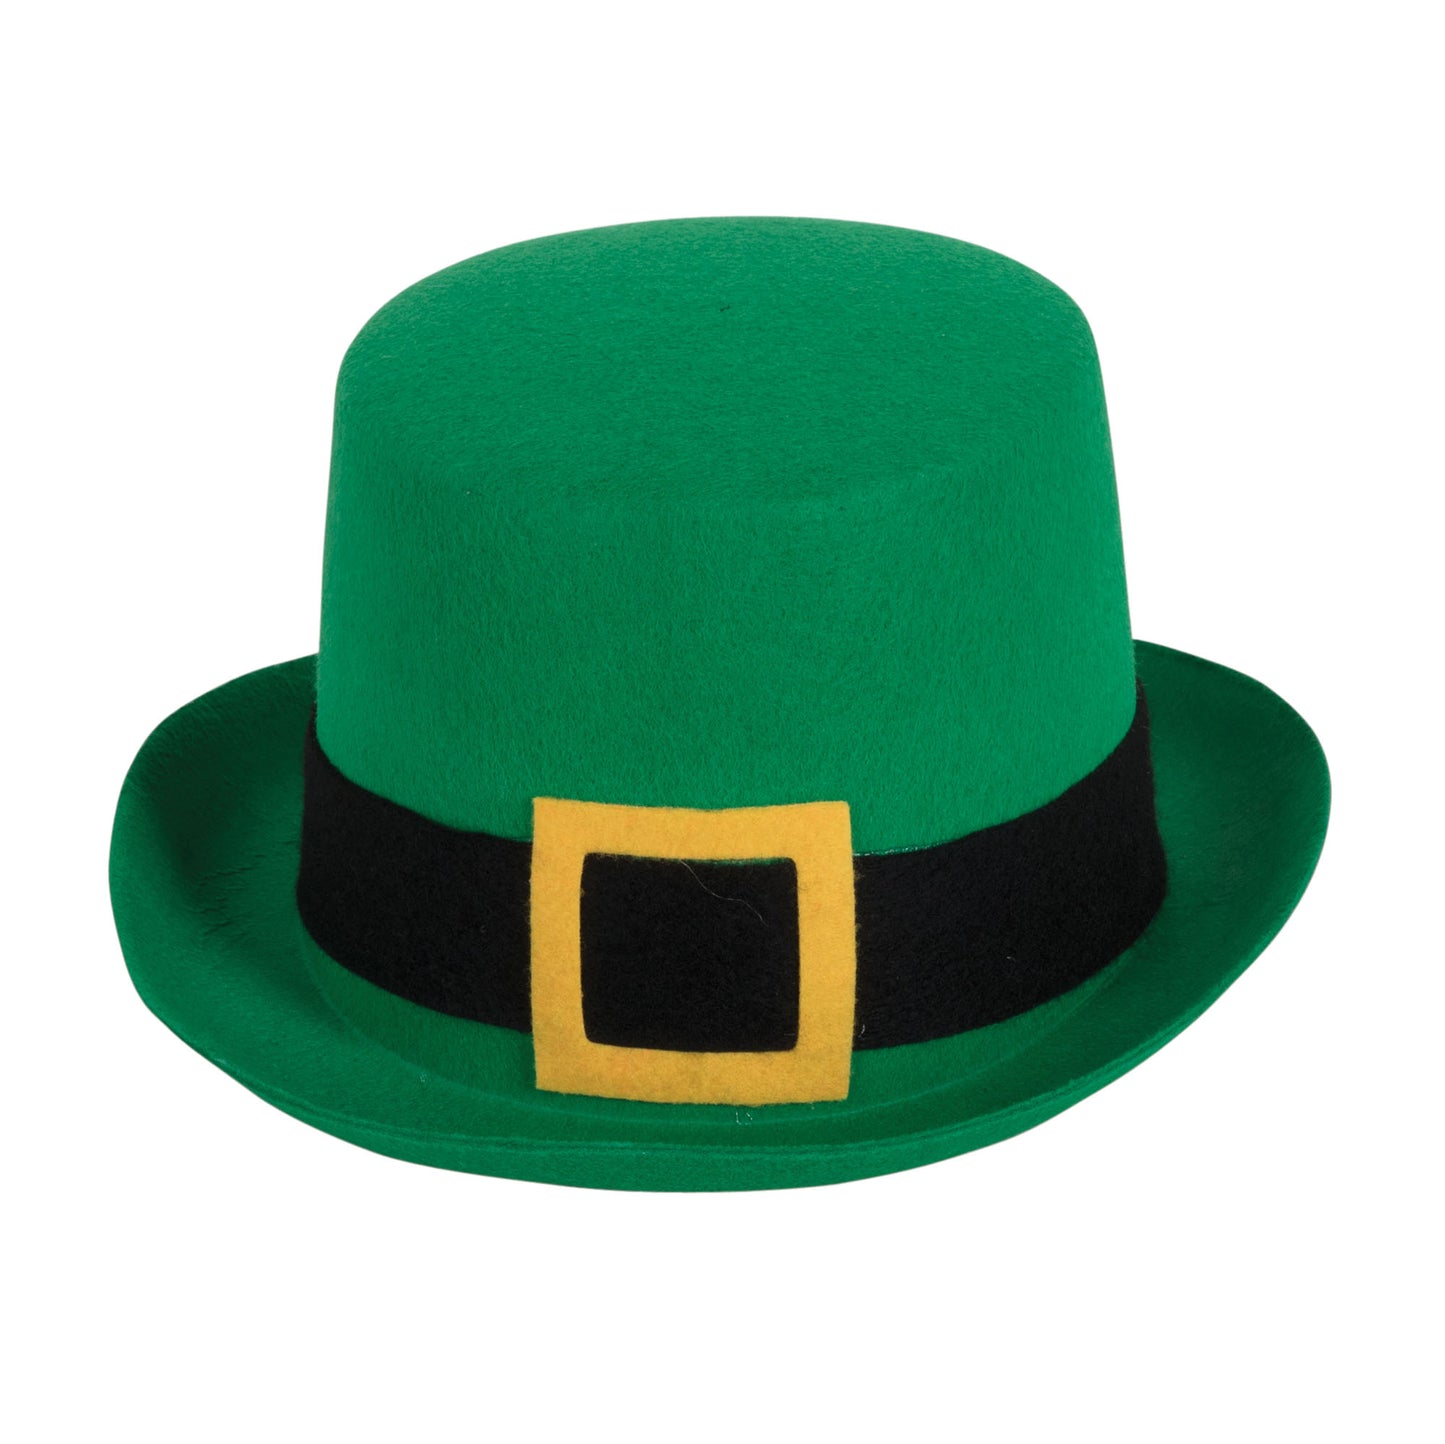 Green Felt Top Hat (St. Patricks Day)